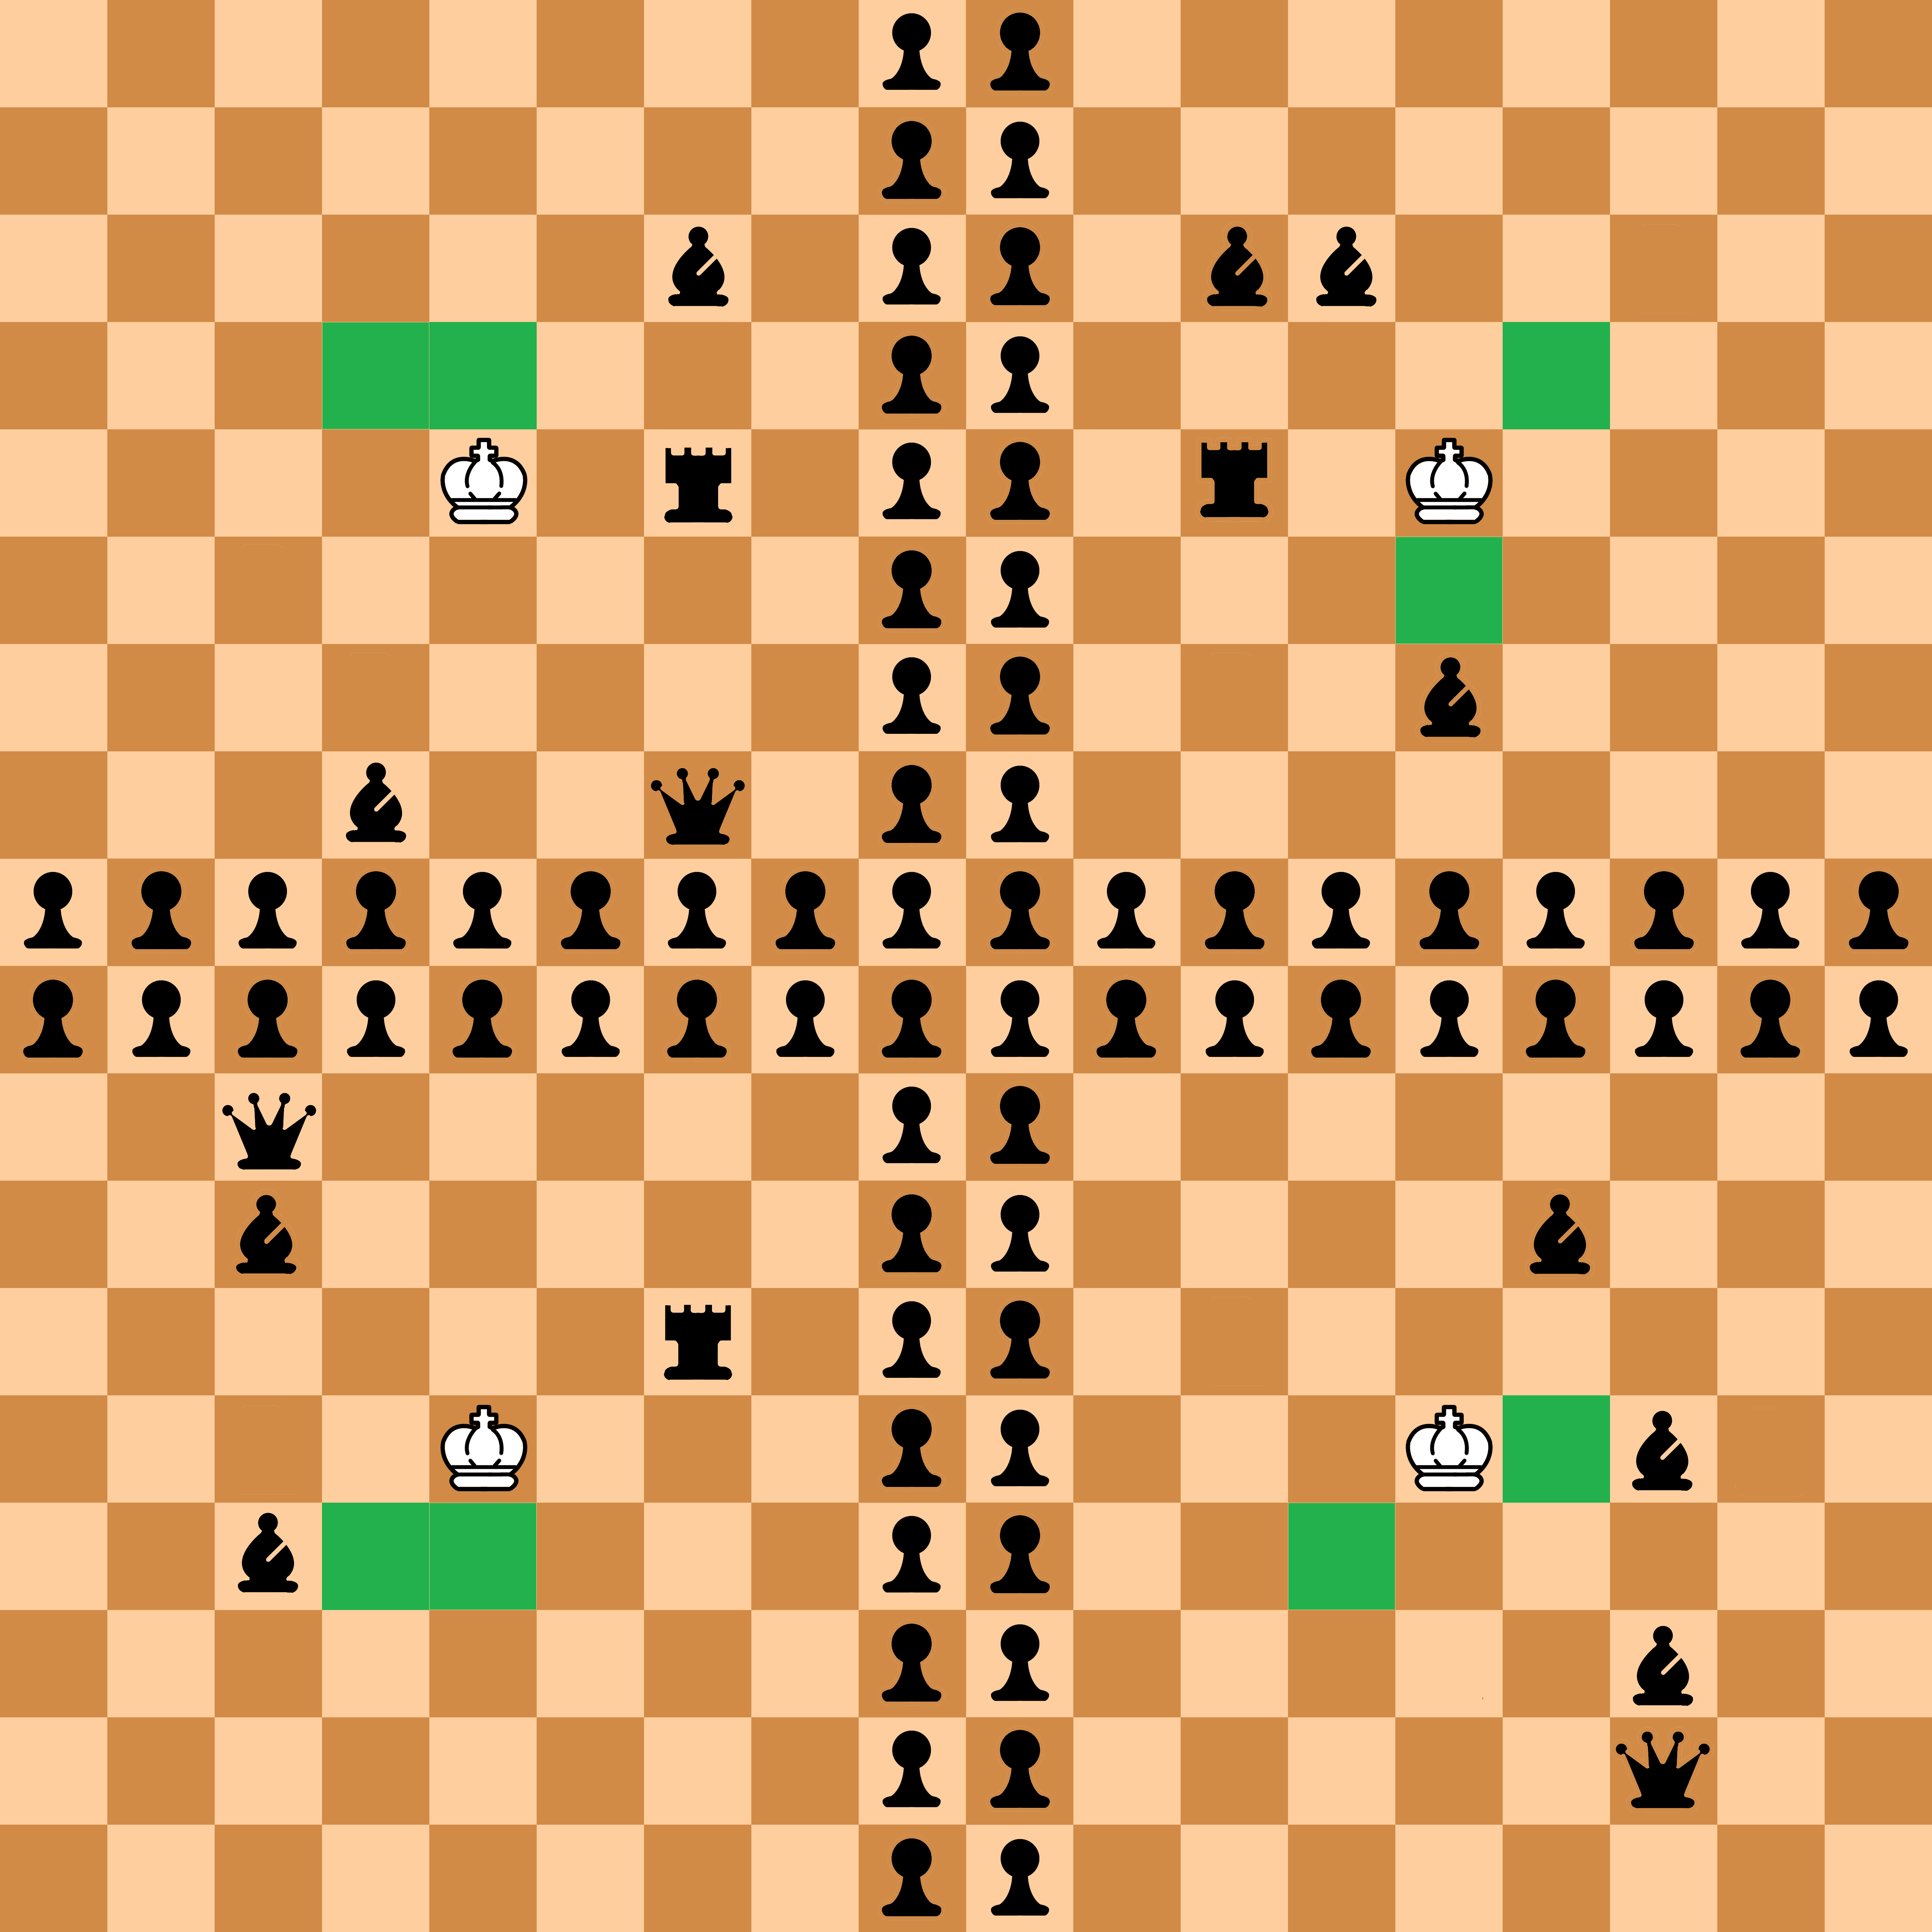 A chessboard